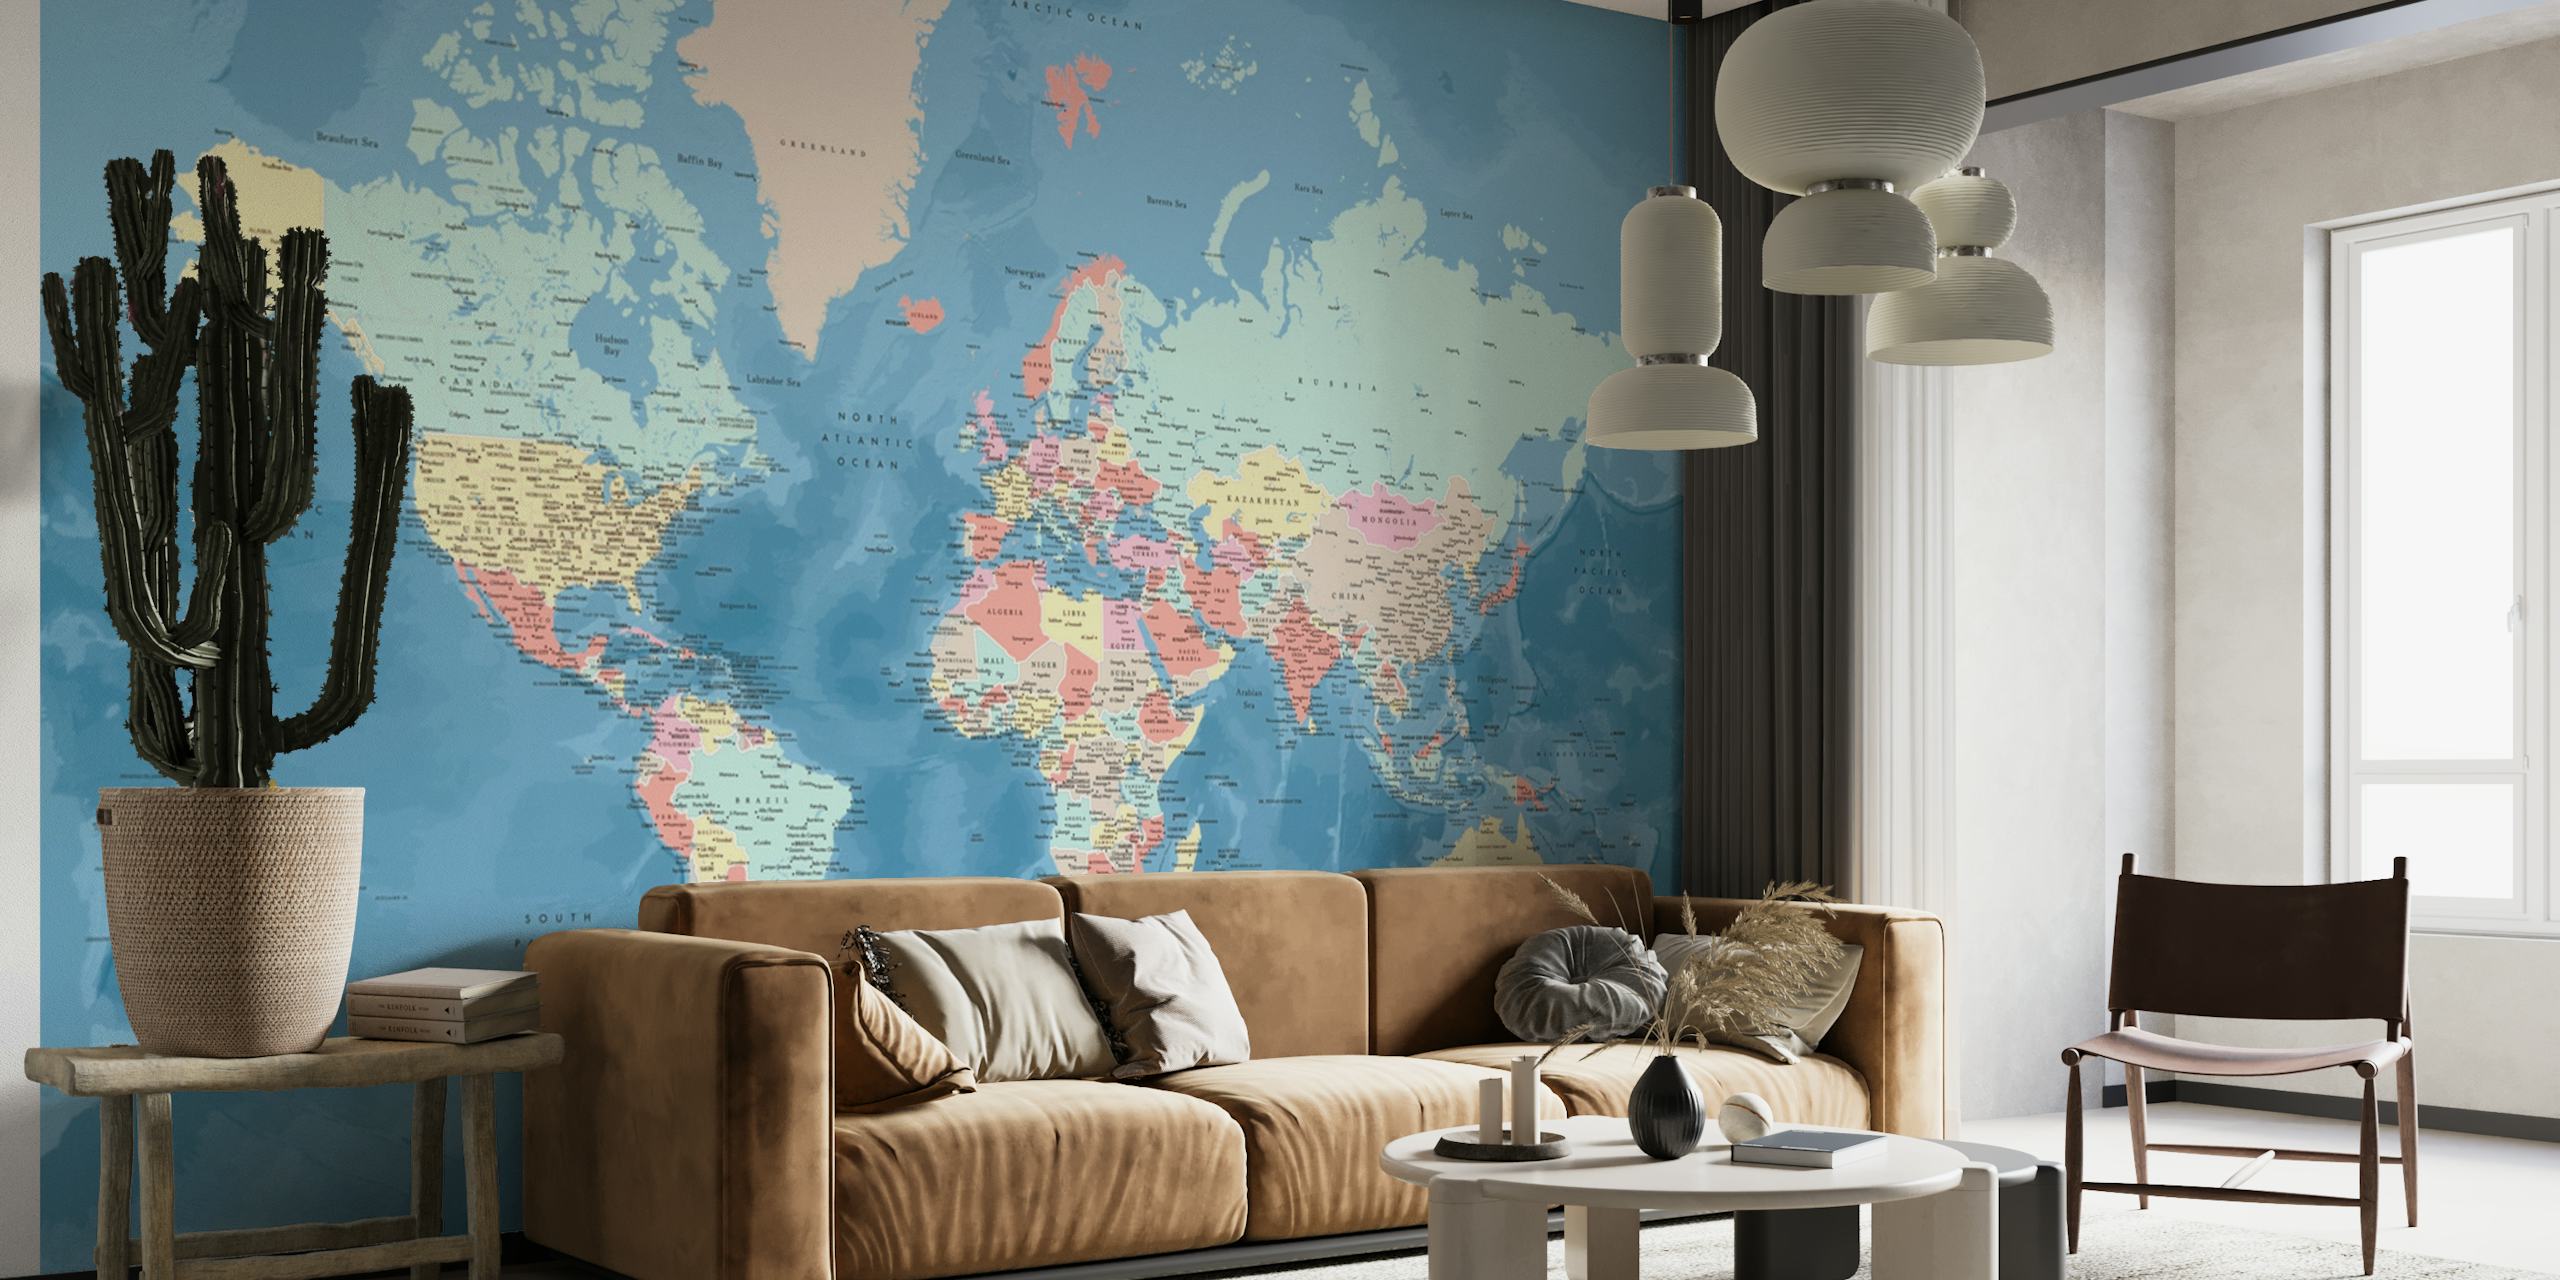 Detailed world map Vickie papel pintado